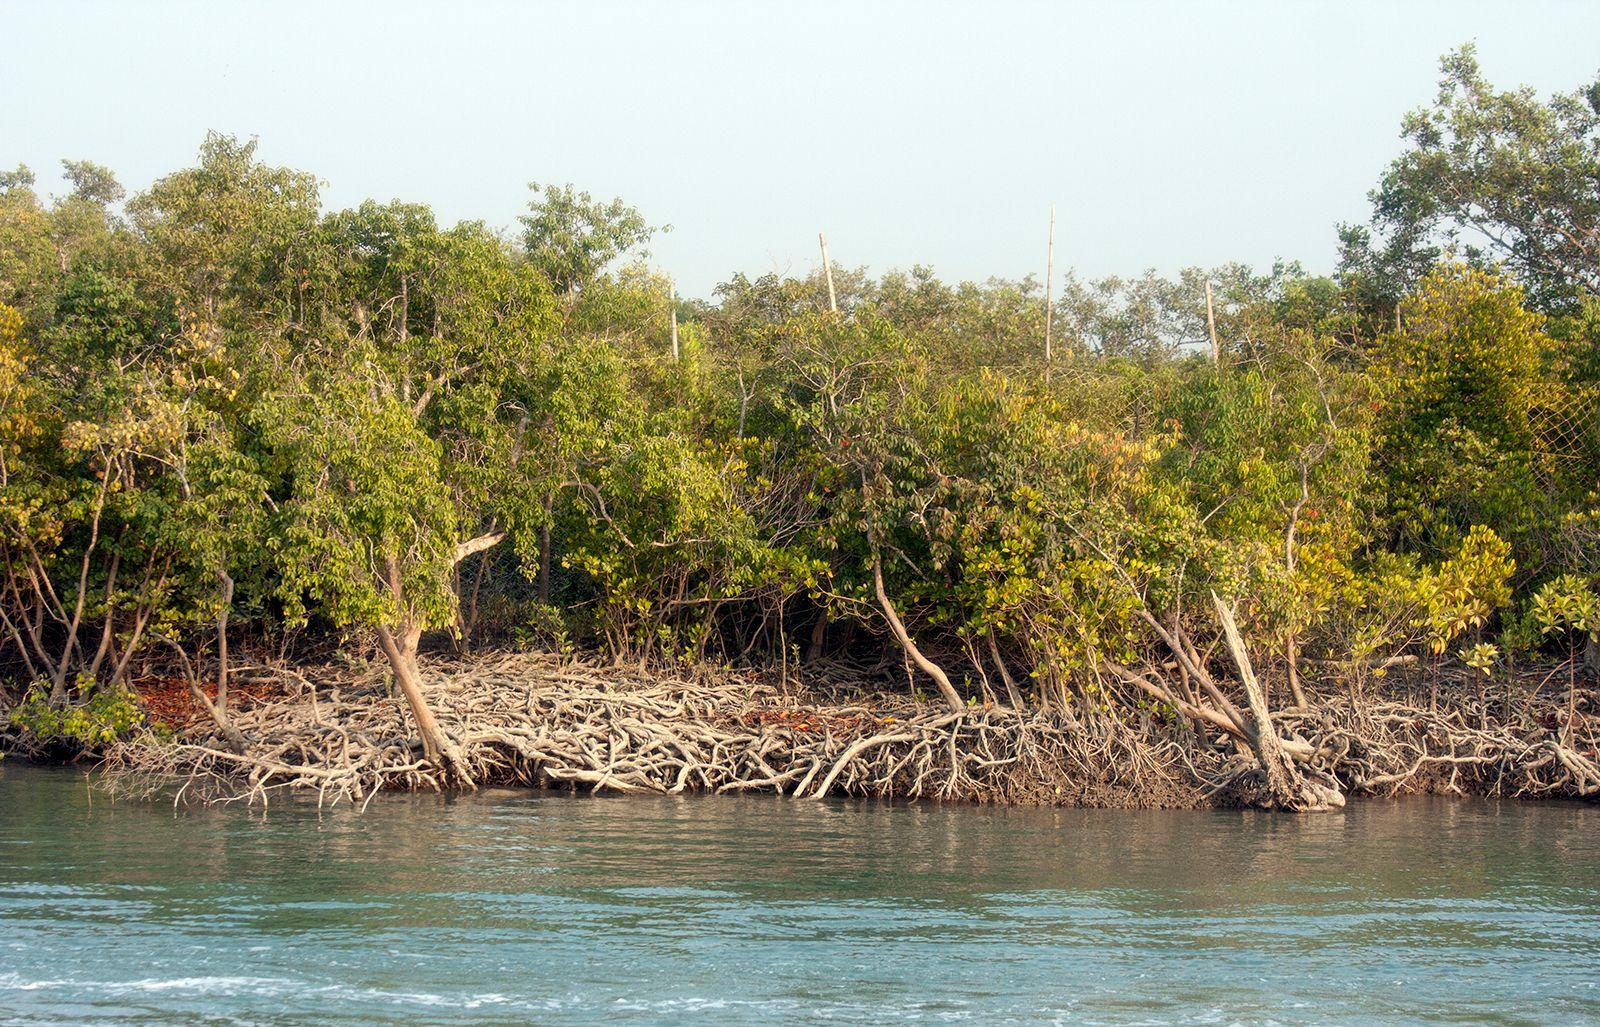 Sundarbans | Mangrove Forest, Wildlife Reserve, India-Bangladesh Border | Britannica